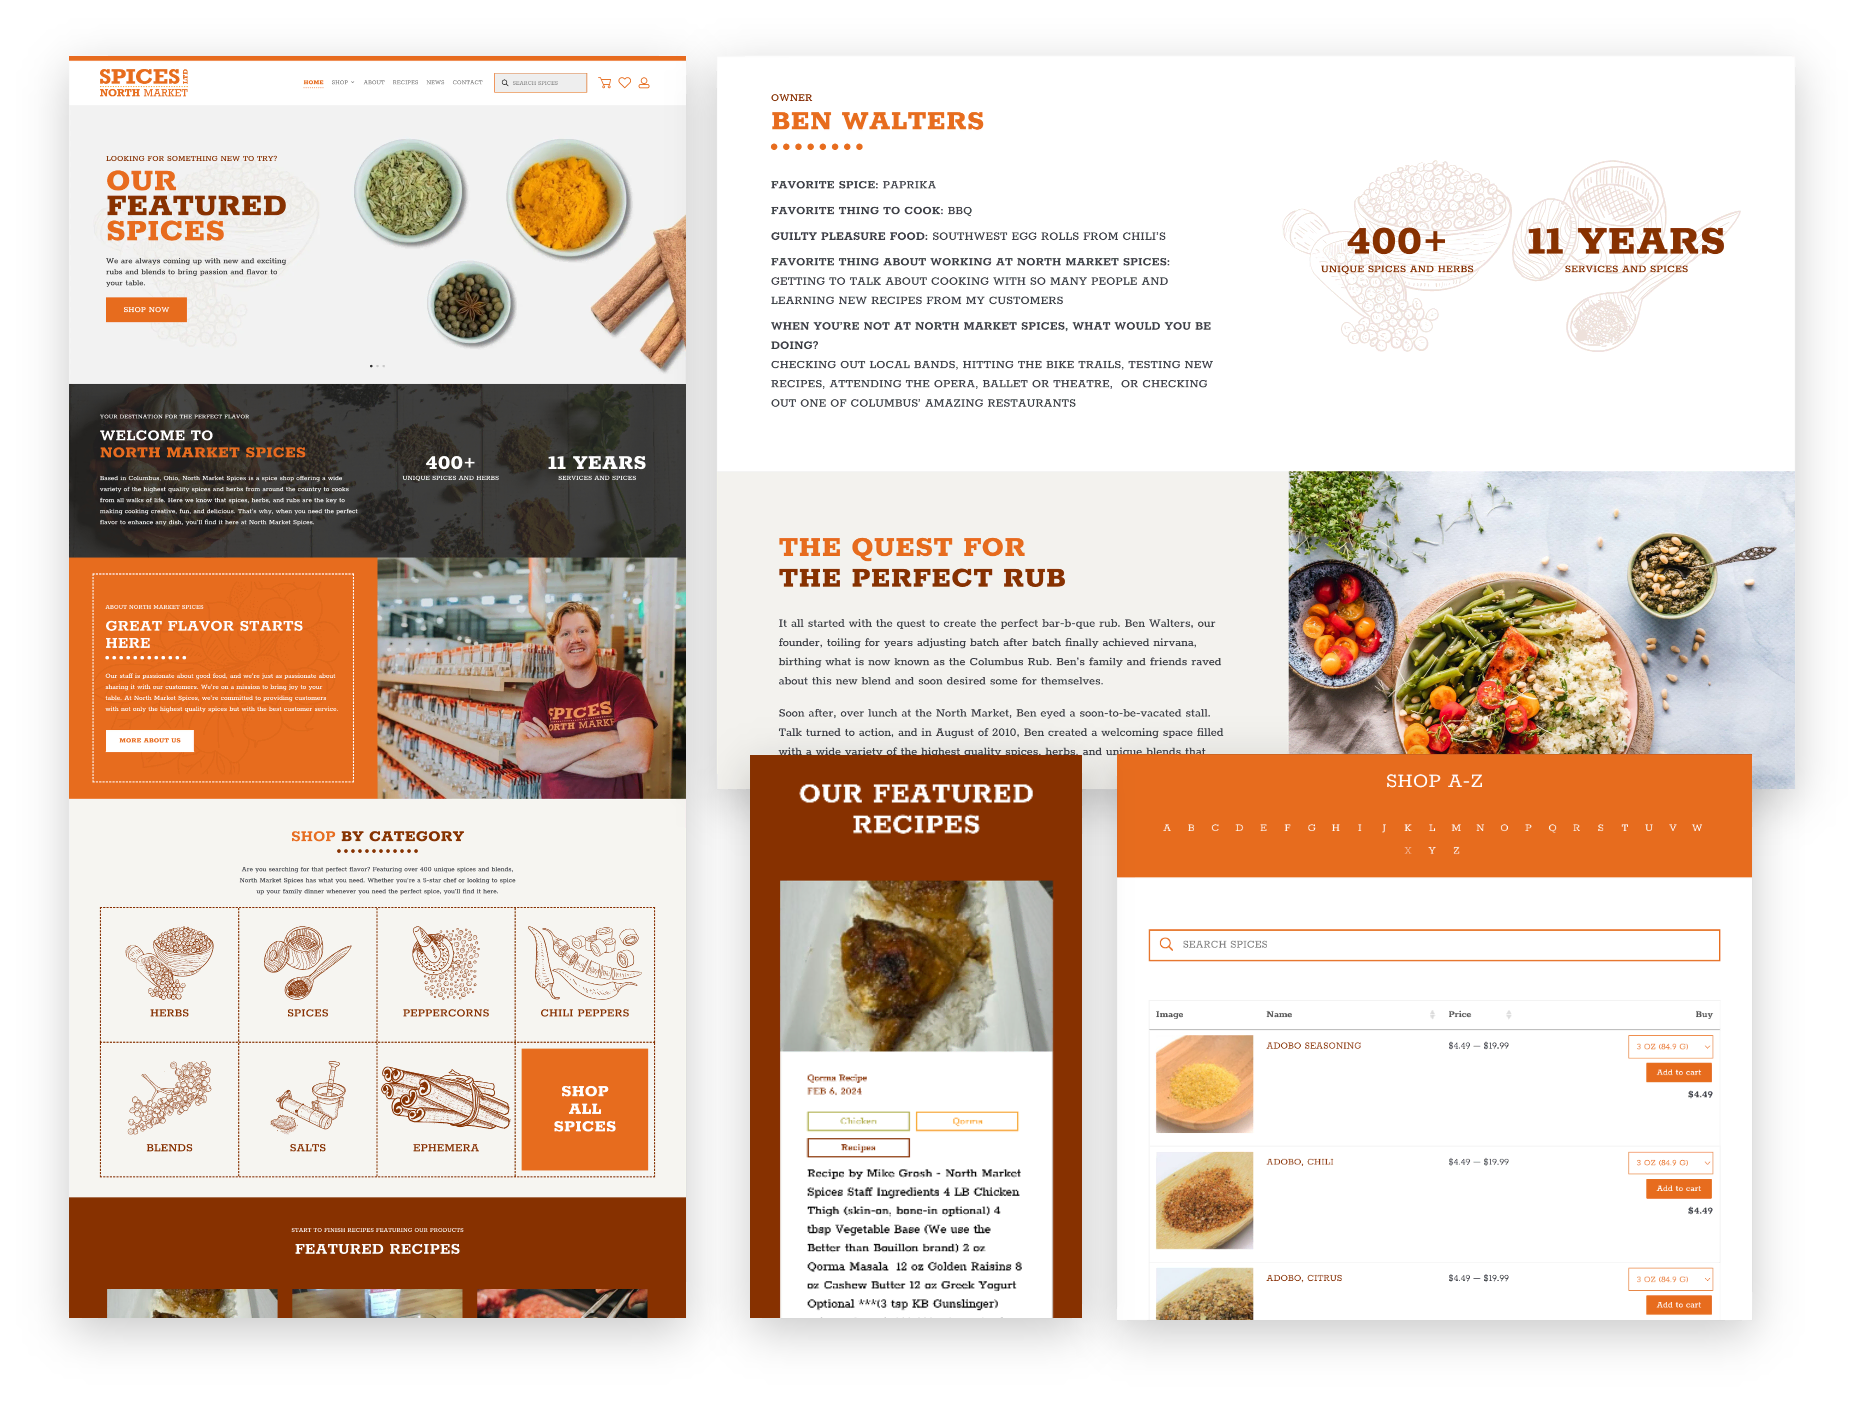 North Market Spices web design mockup featuring orange, white and black color palette.